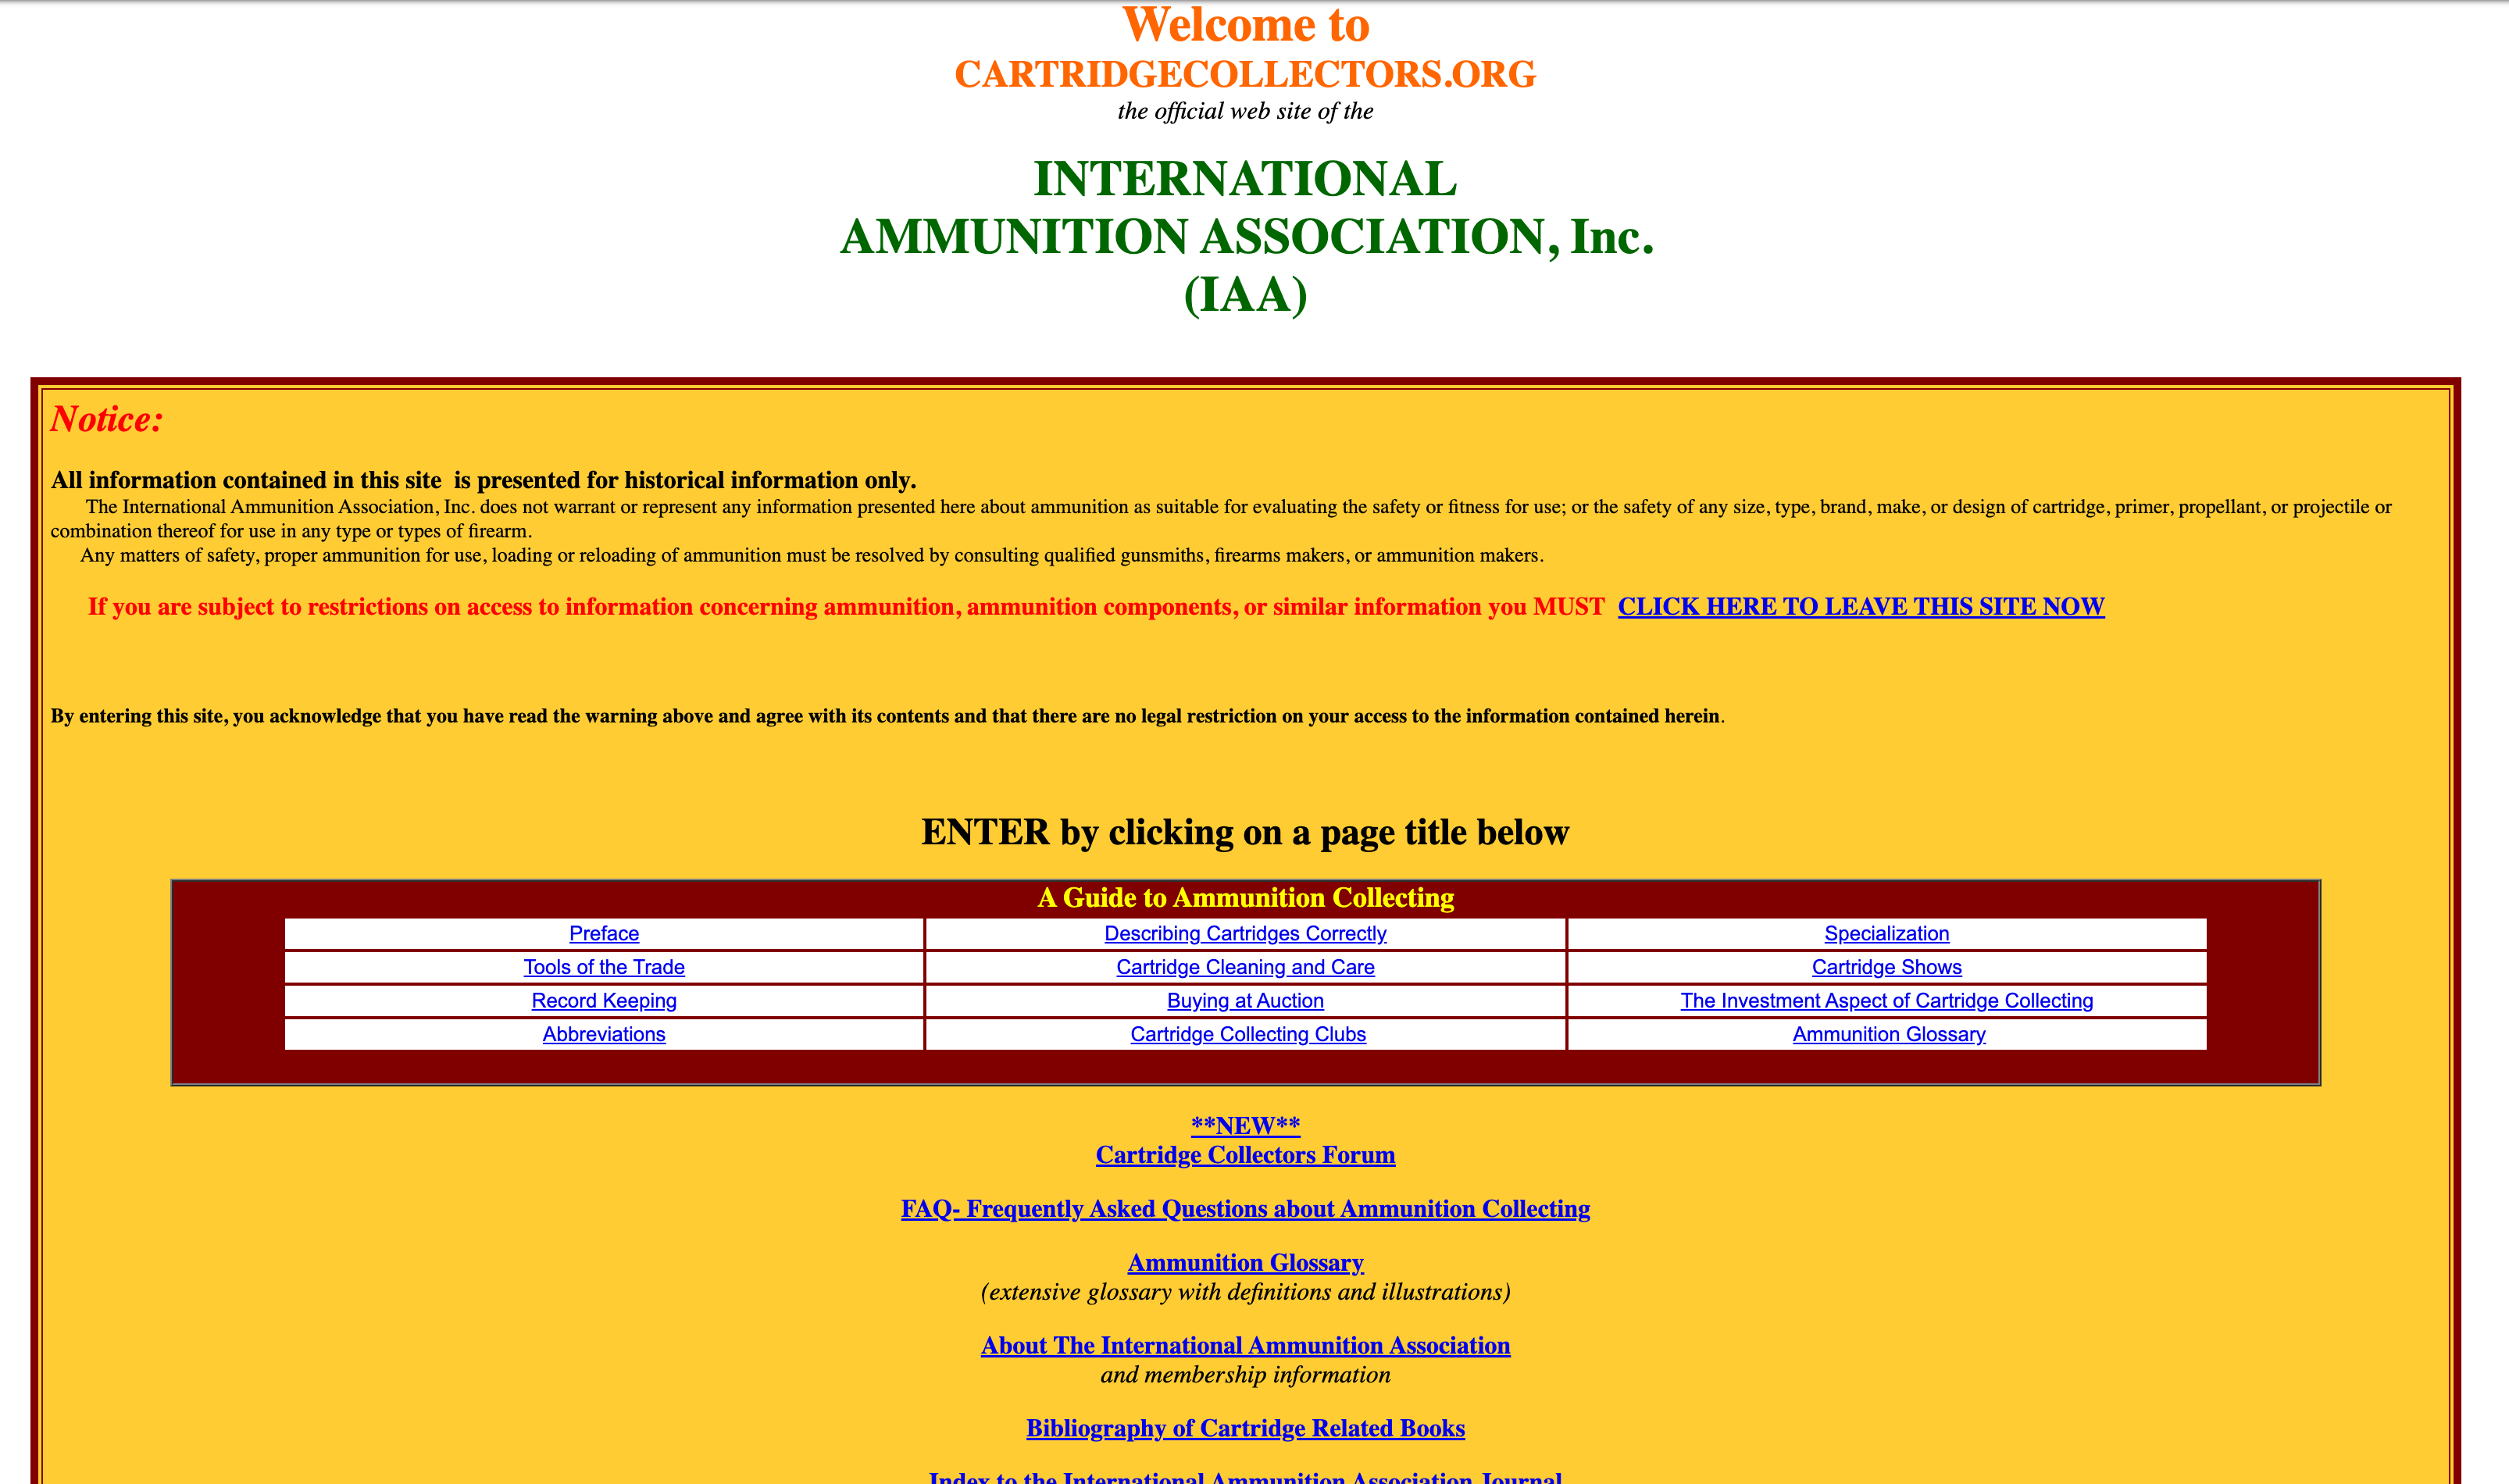 Established IAA Website